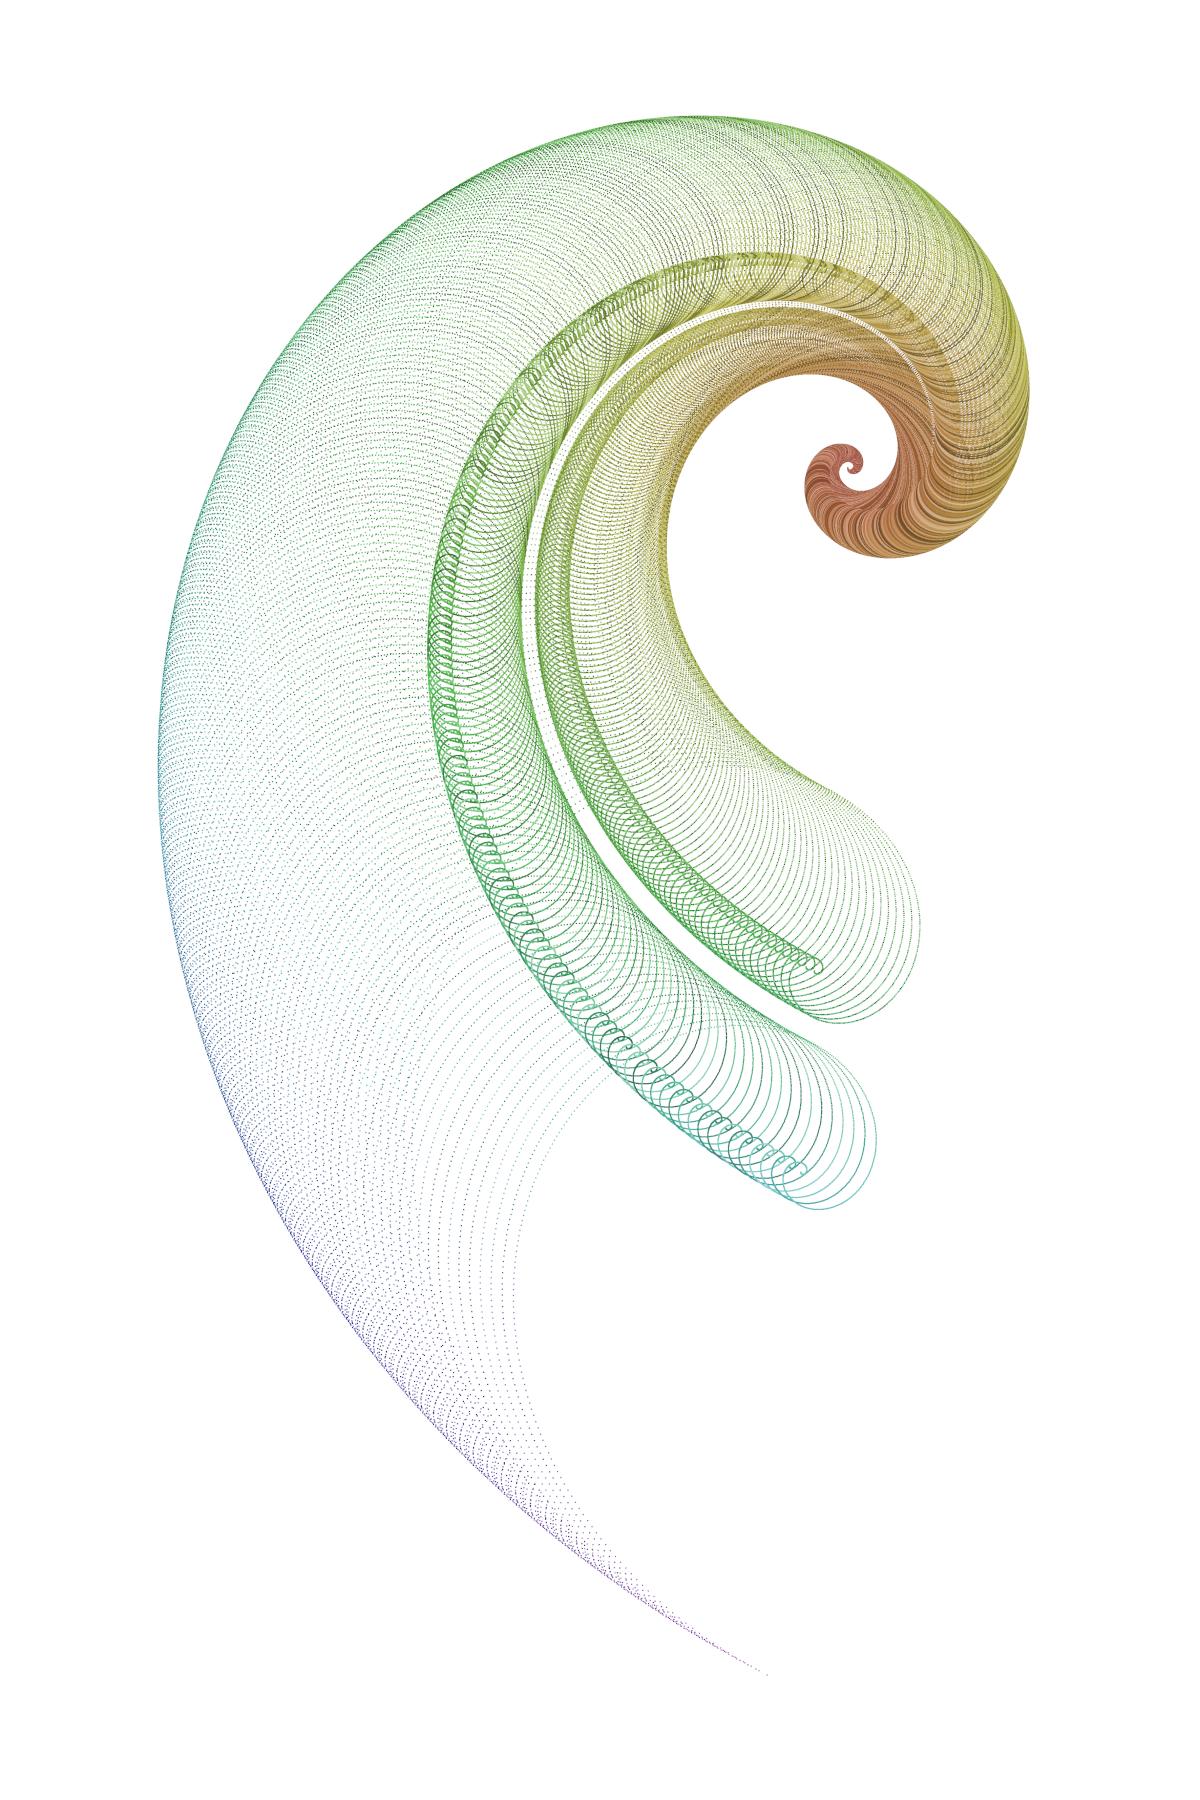 Image for entry 'Hidden spirals'